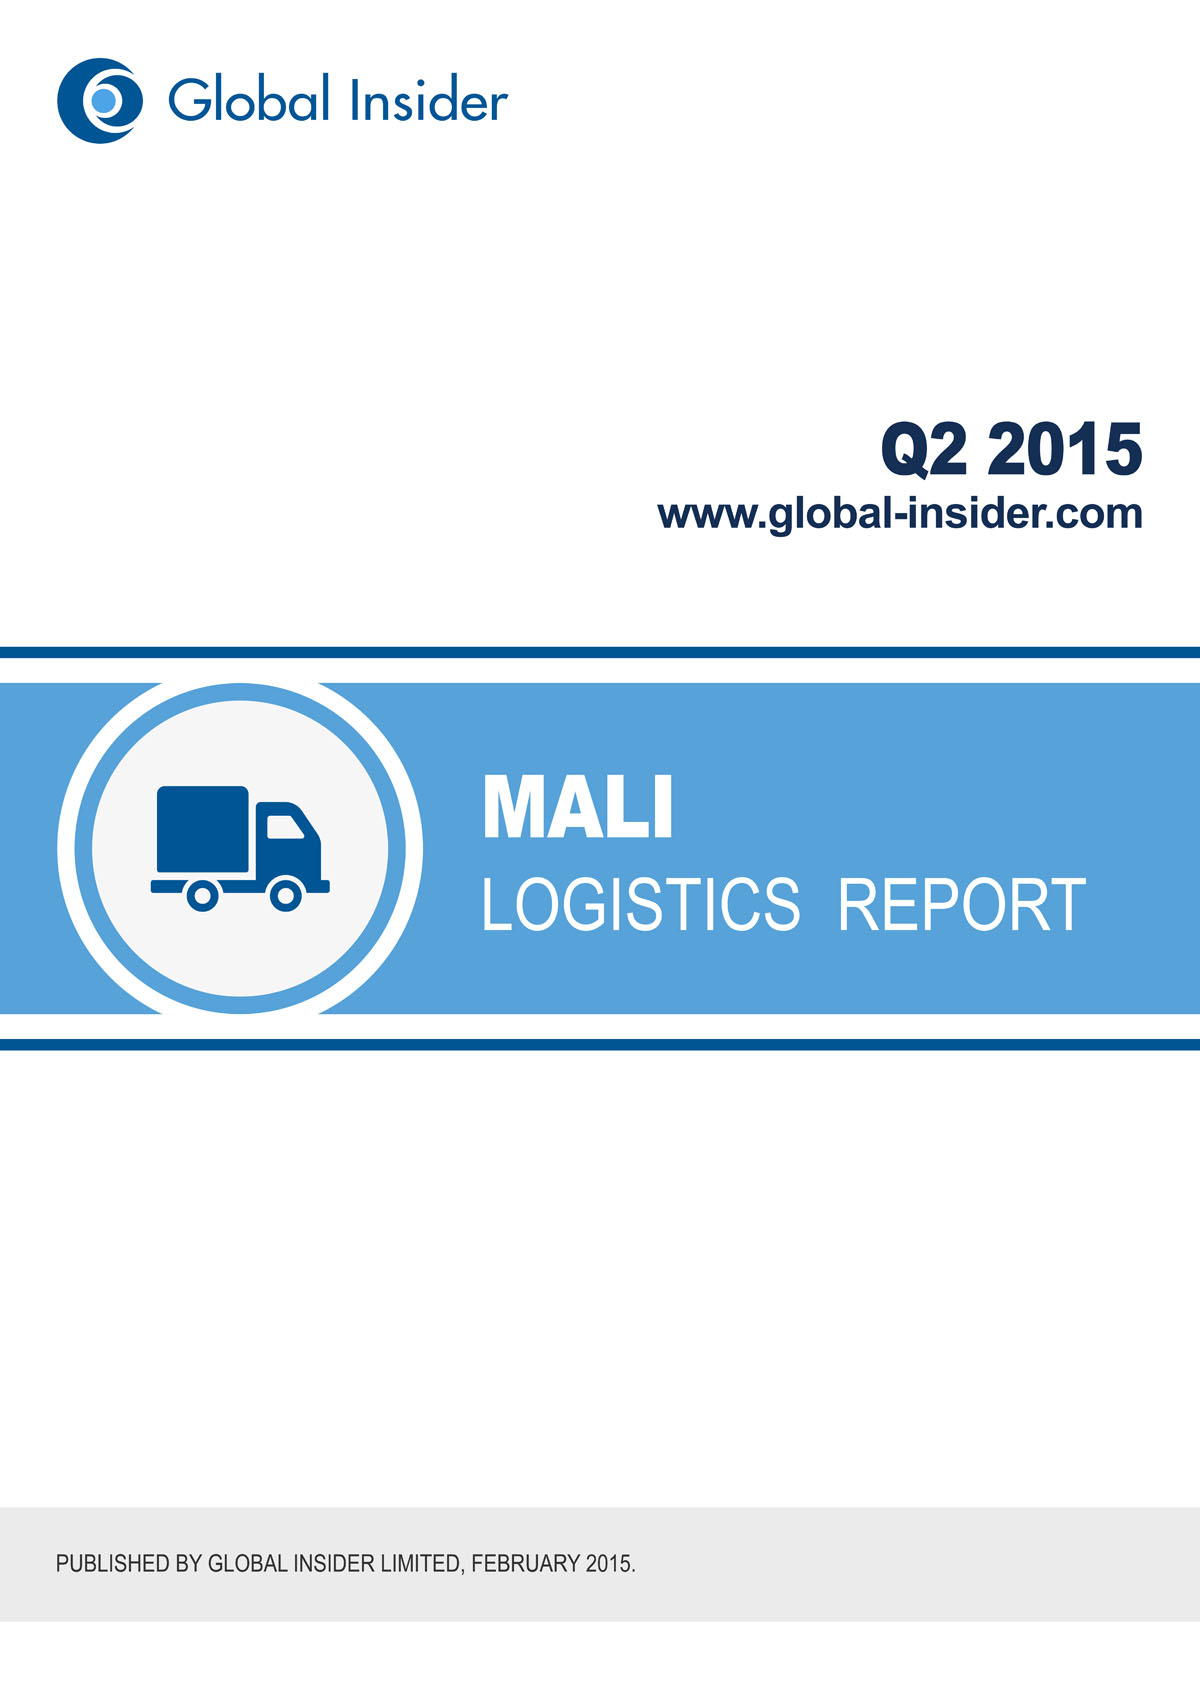 Mali Logistics Report